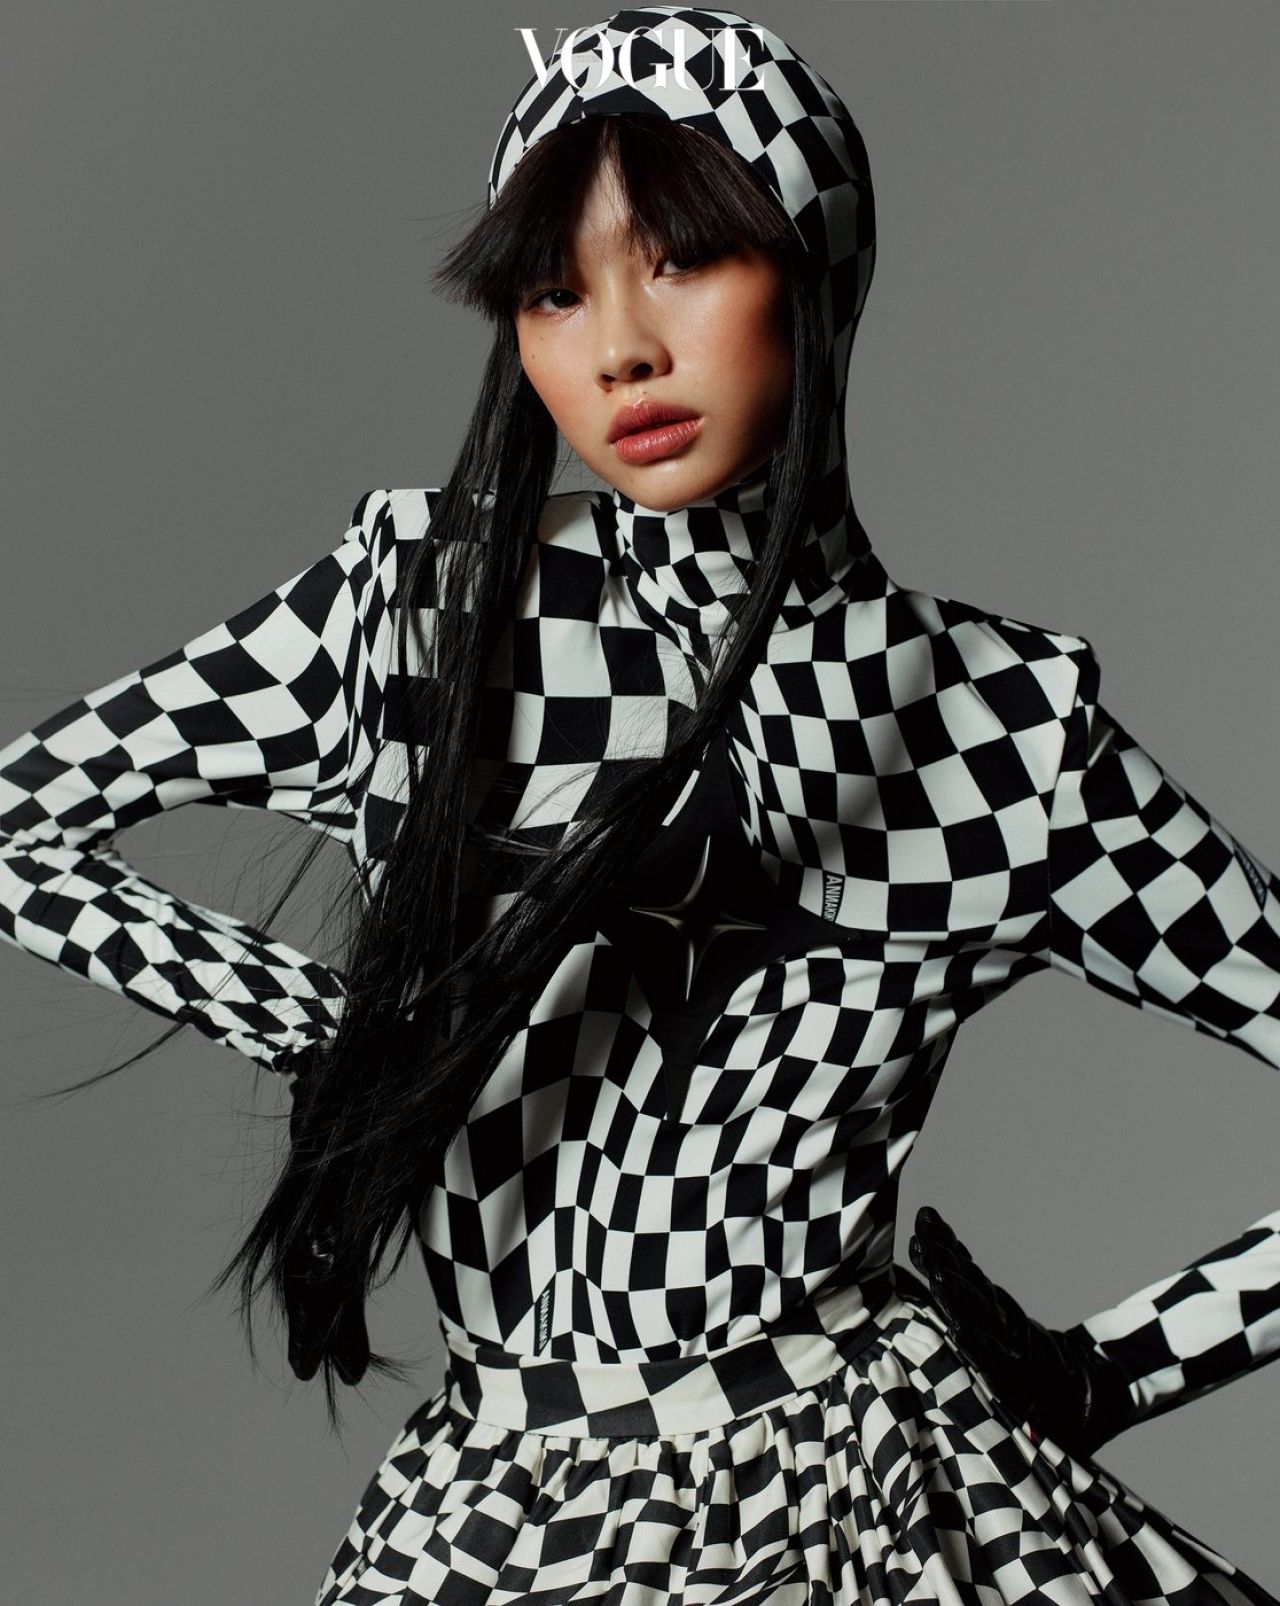 HoYeon Jung on the cover of Vogue Korea, November 2021.